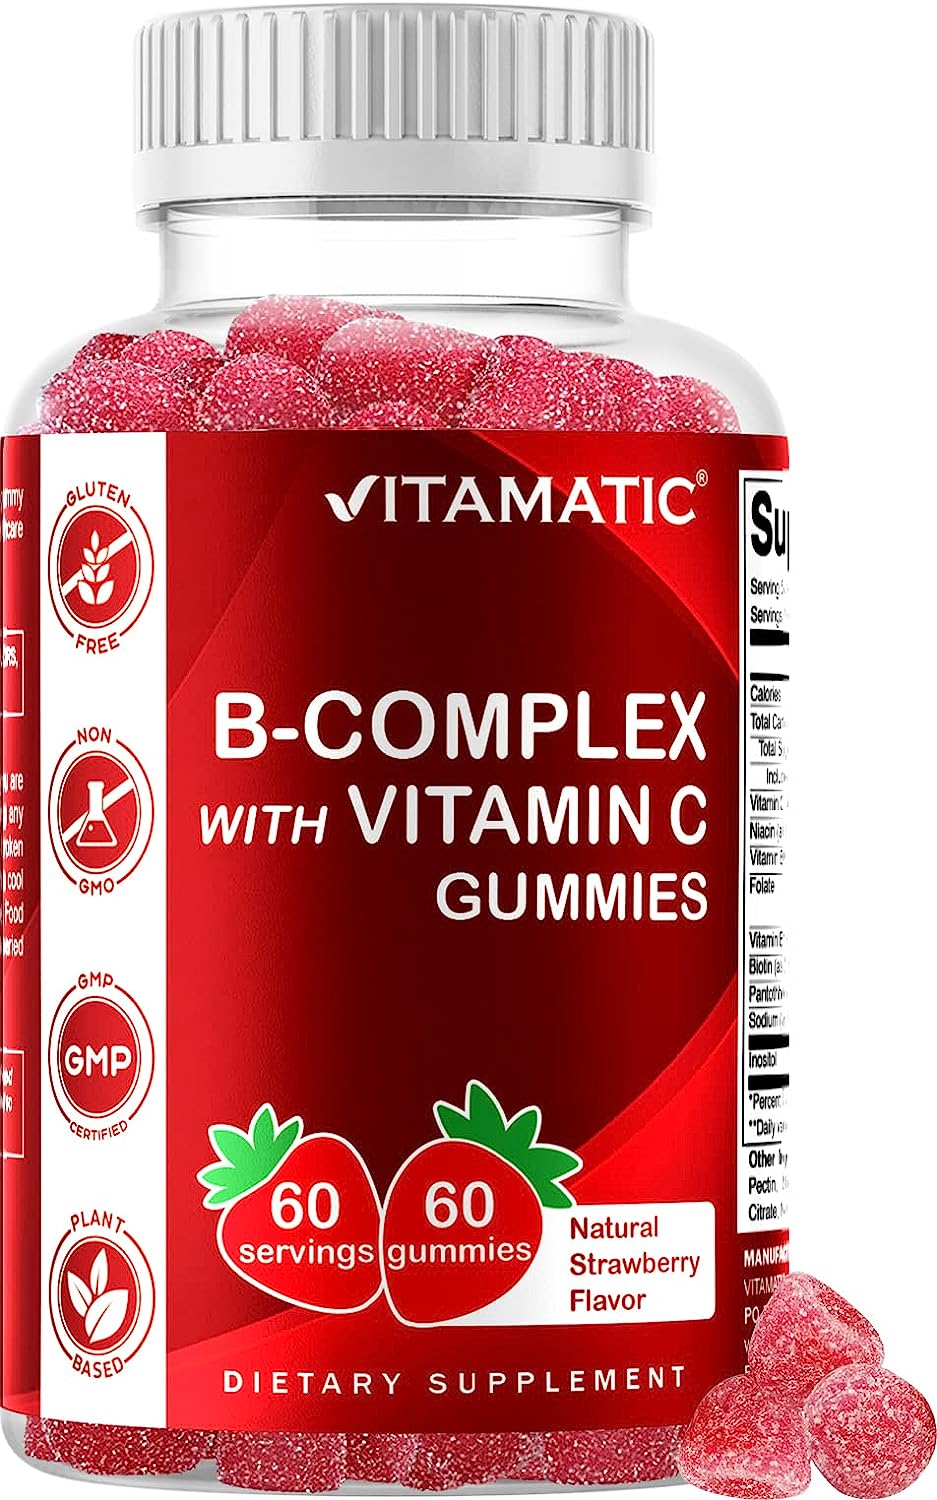 Vitamatic Vitamin B Complex Gummies with Vitamin C & Inositol - Natural Strawberry Flavor - 60 Gummies (1 Bottle)